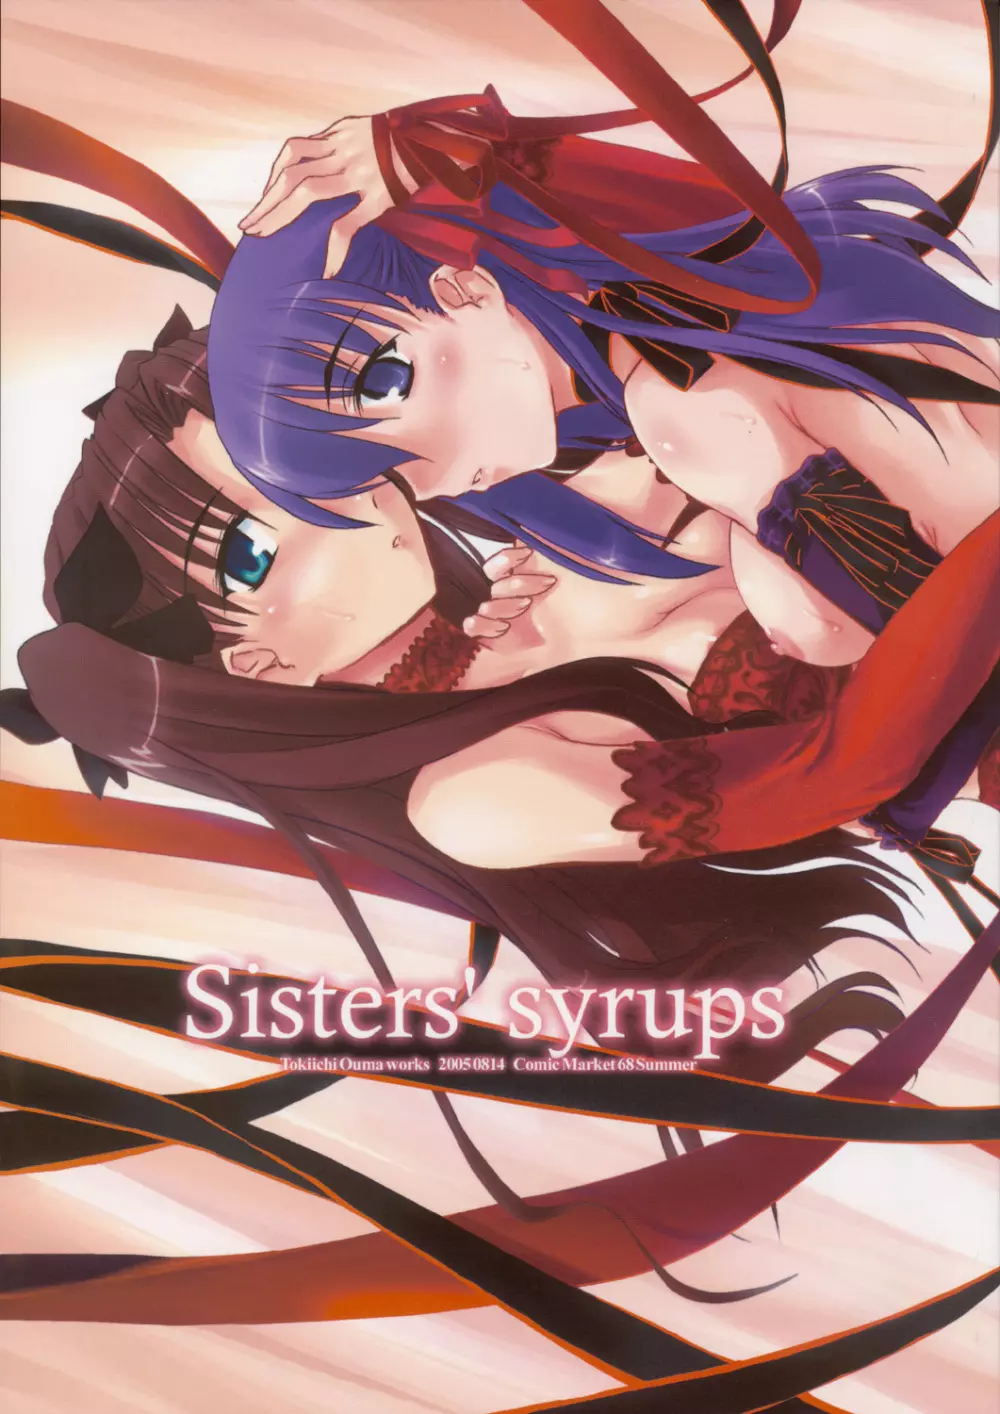 Sisters’ syrups